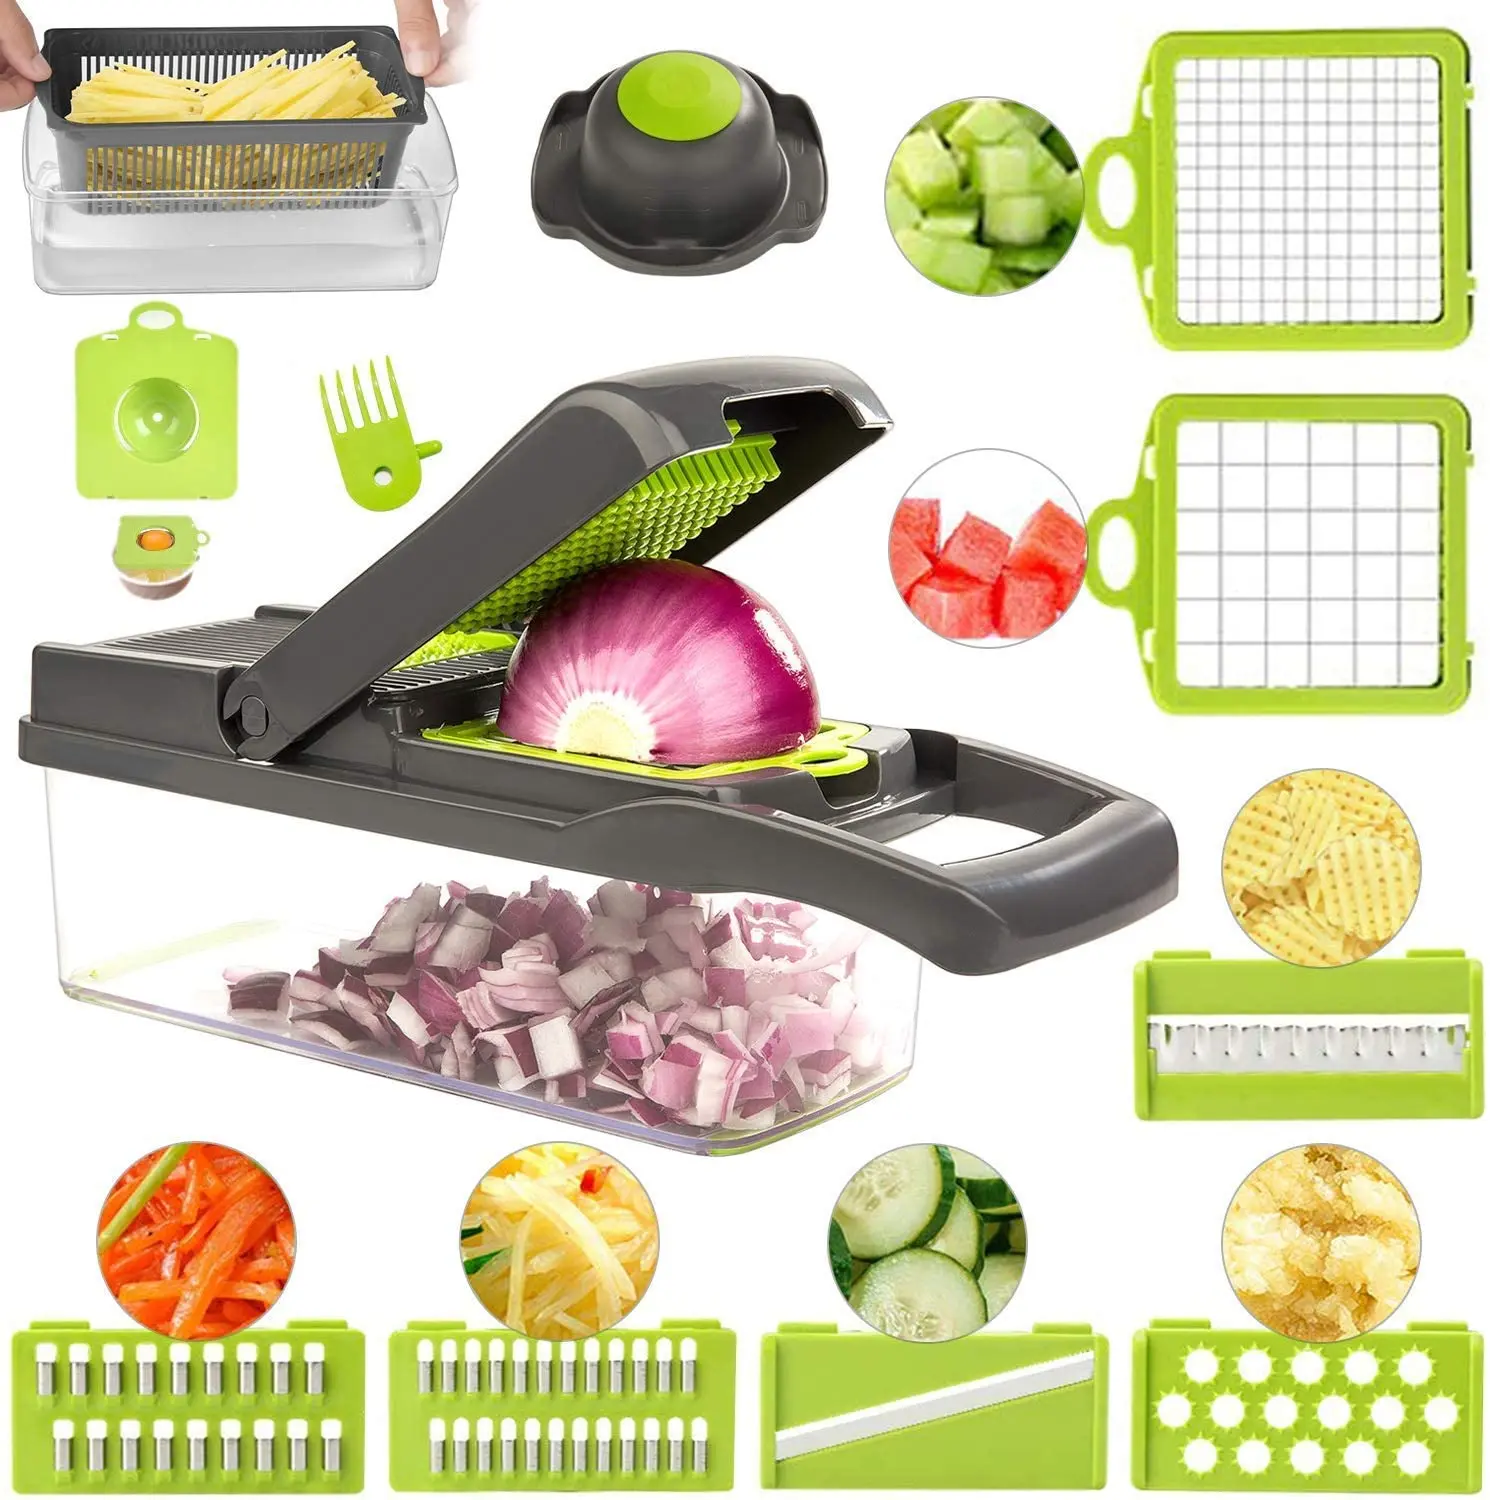 https://ae01.alicdn.com/kf/Sc229c8d0f86e4f678611cae83859c1bap/14-in-1-Vegetable-Chopper-Fruit-Slicer-Mandoline-Slicer-Cutter-with-Drain-Basket-Potato-Onion-Kitchen.jpg